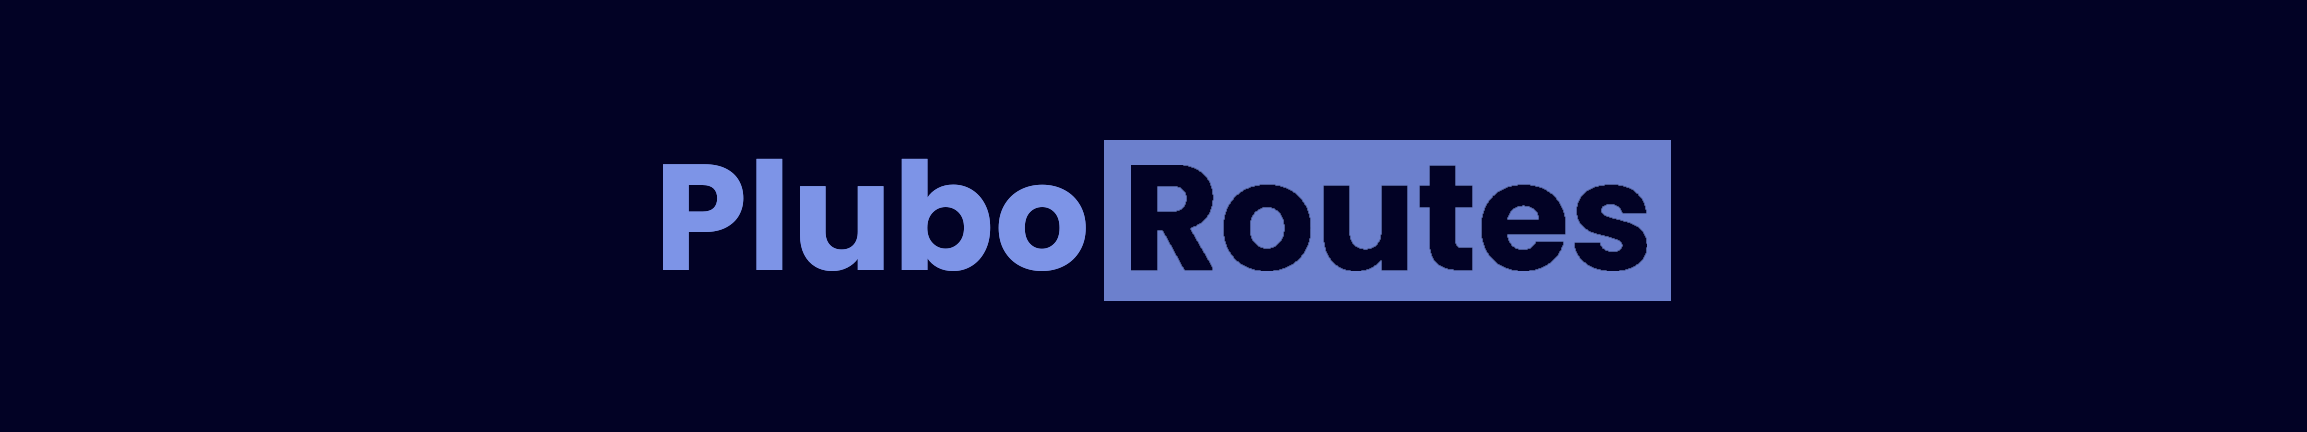 Plubo Routes